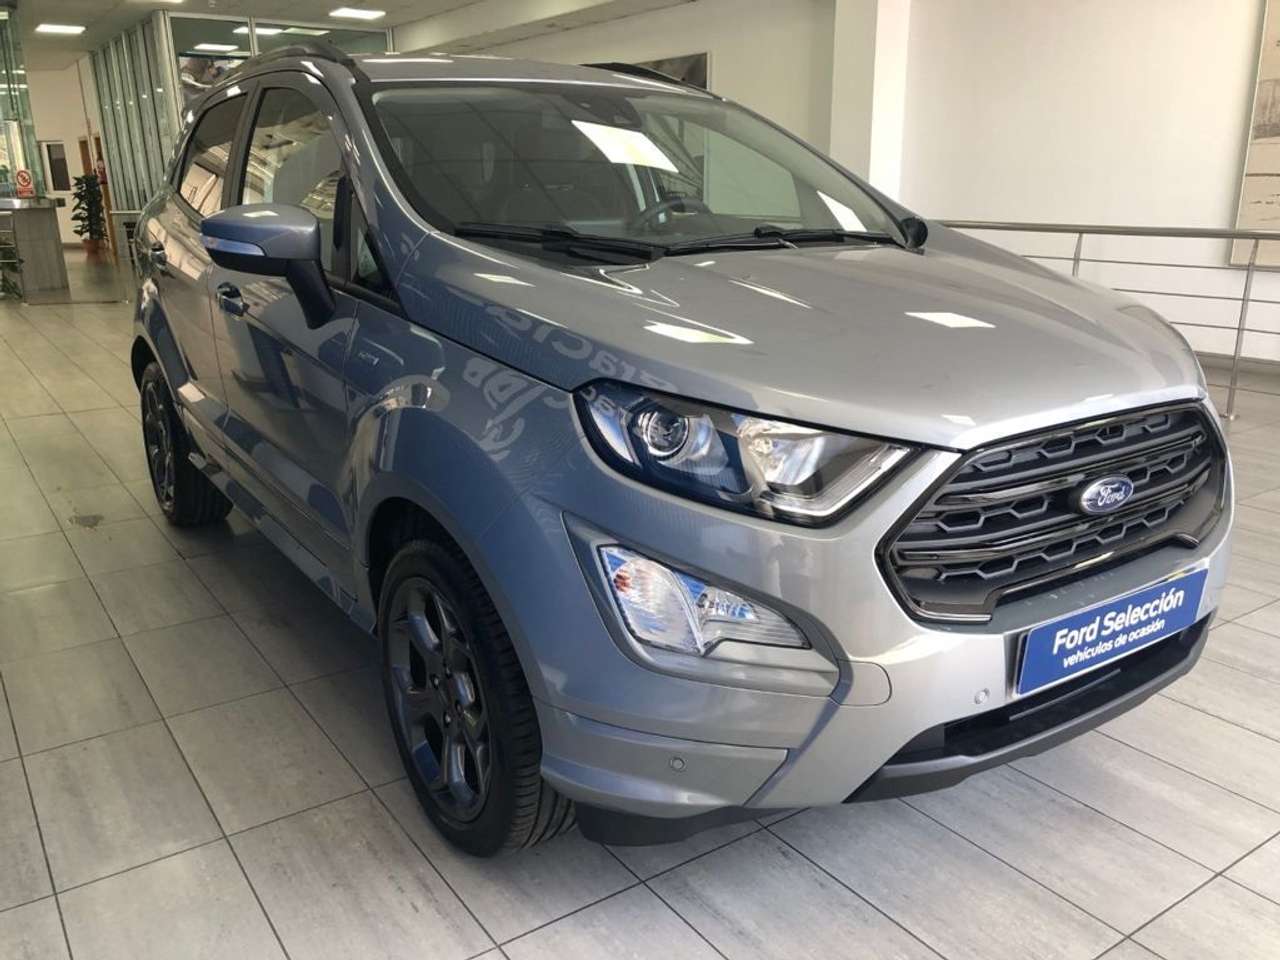 Ford-ExoSport-en-Canarias